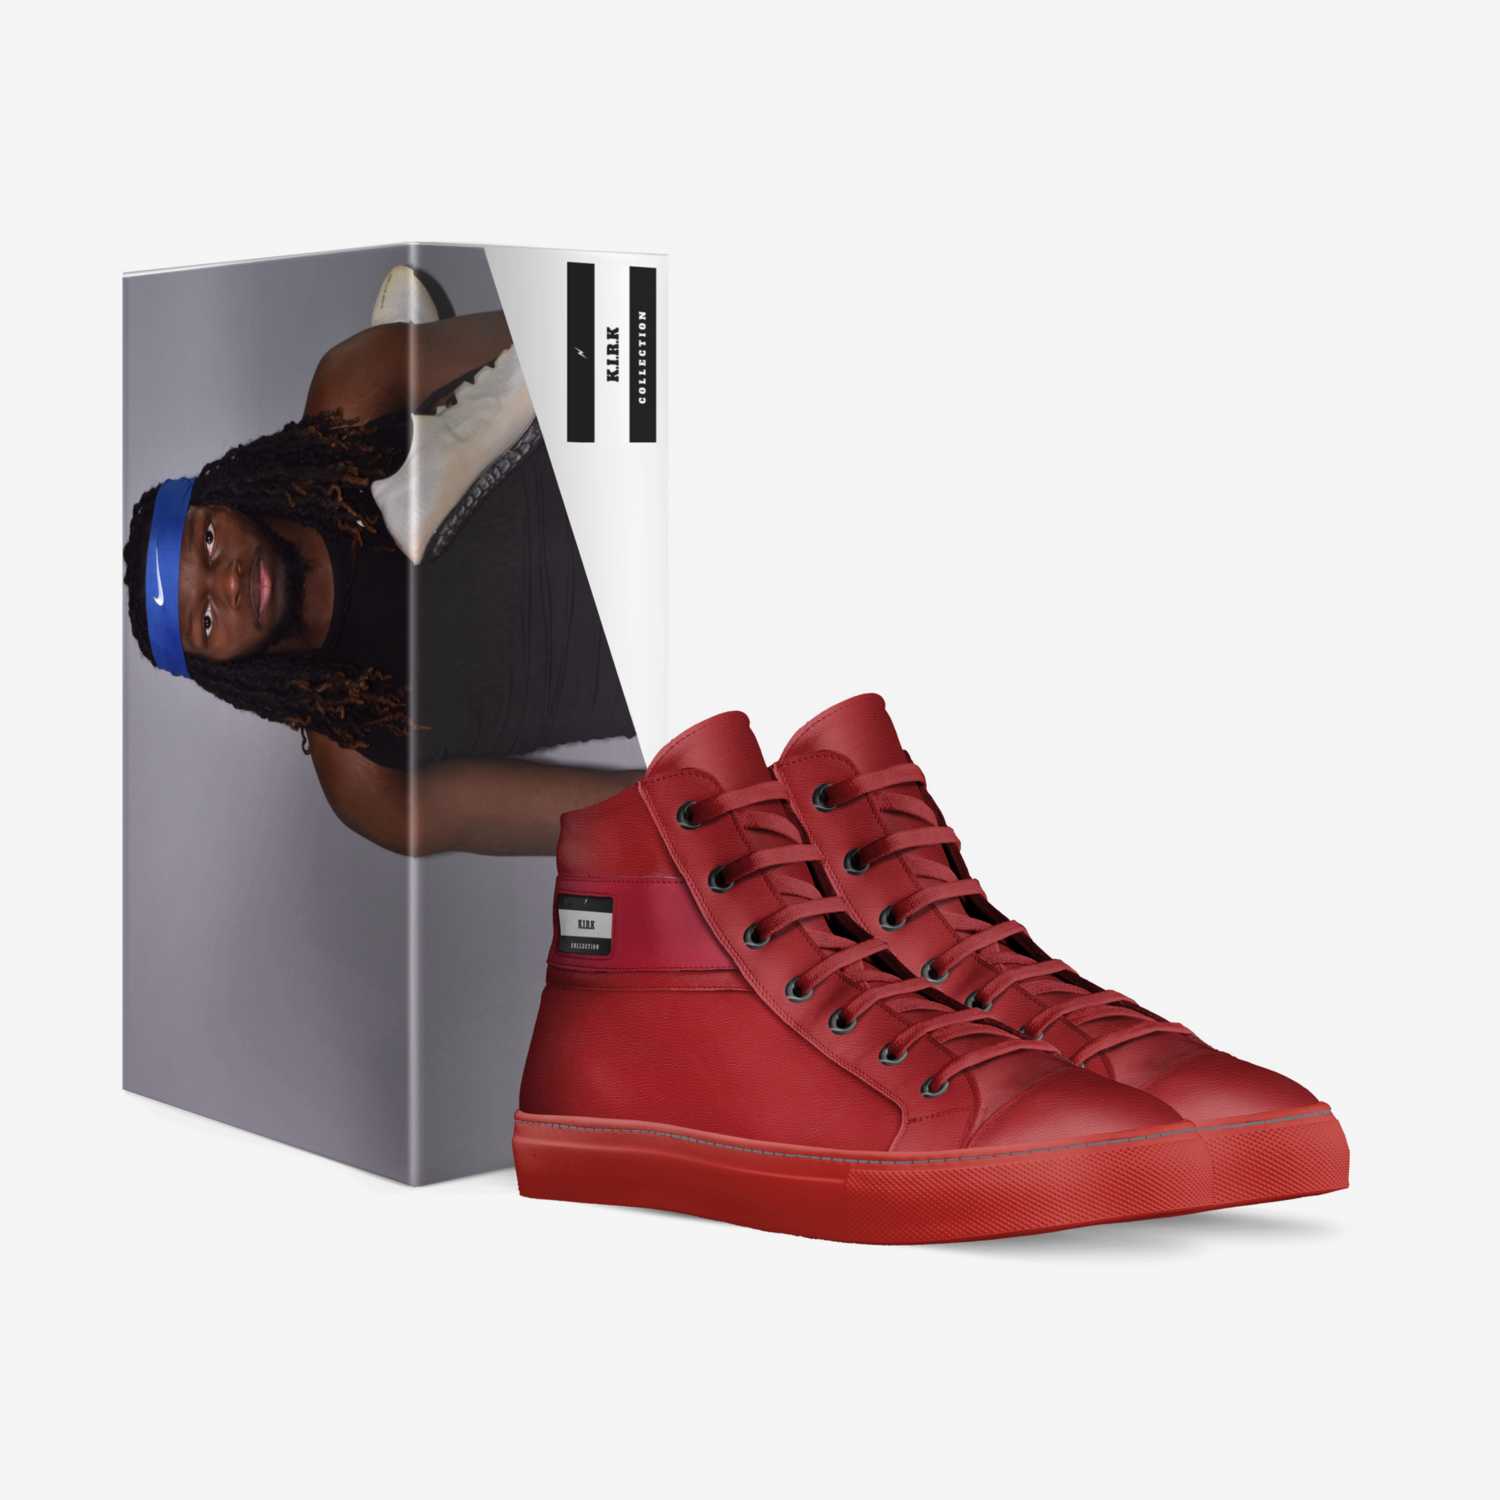 KIRK custom made in Italy shoes by Marlek Kirk | Box view